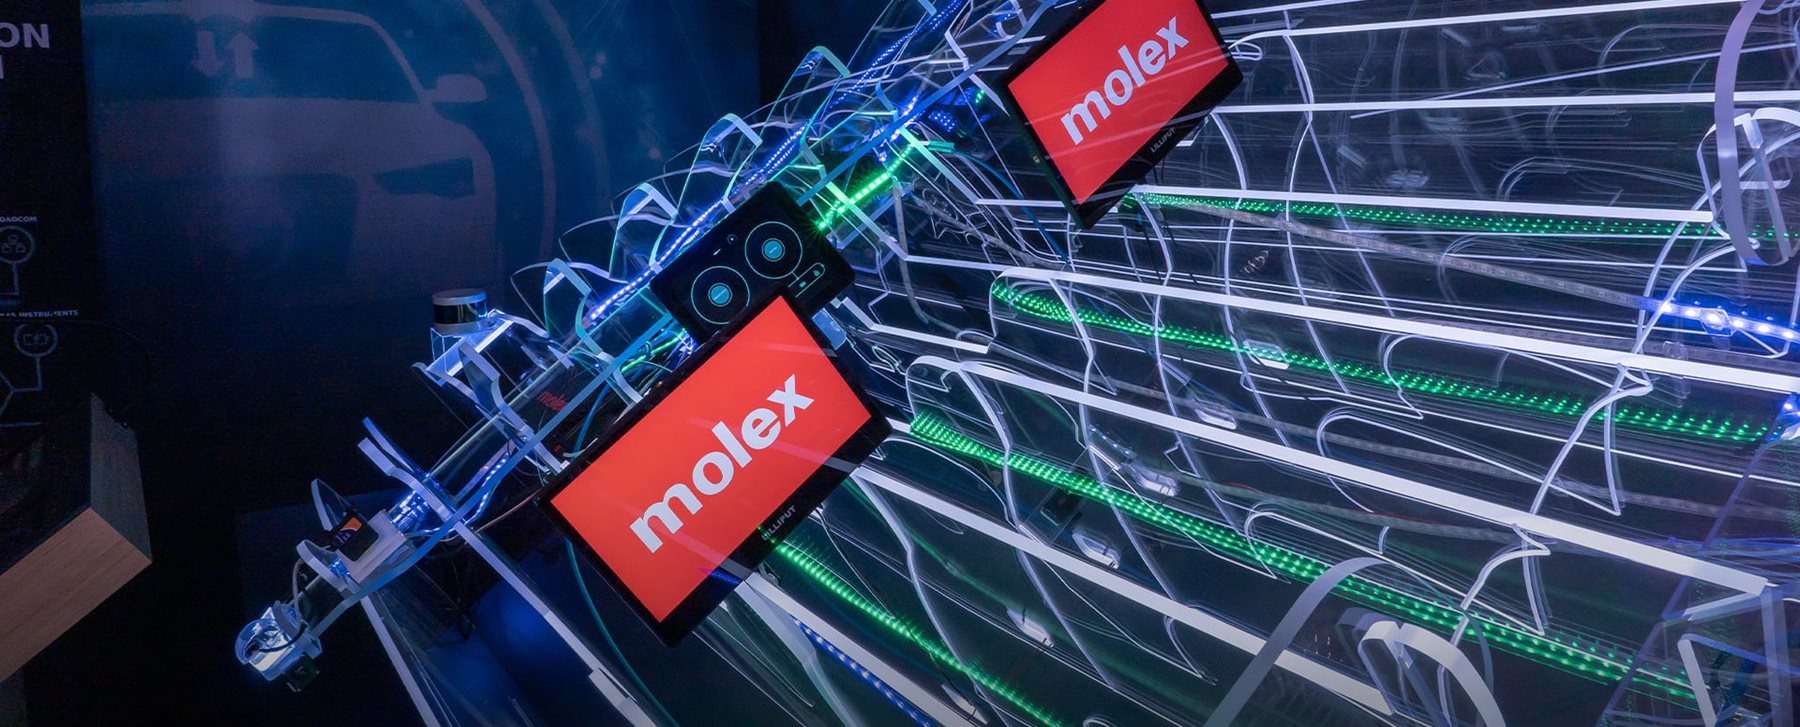 Molex: Driving Change